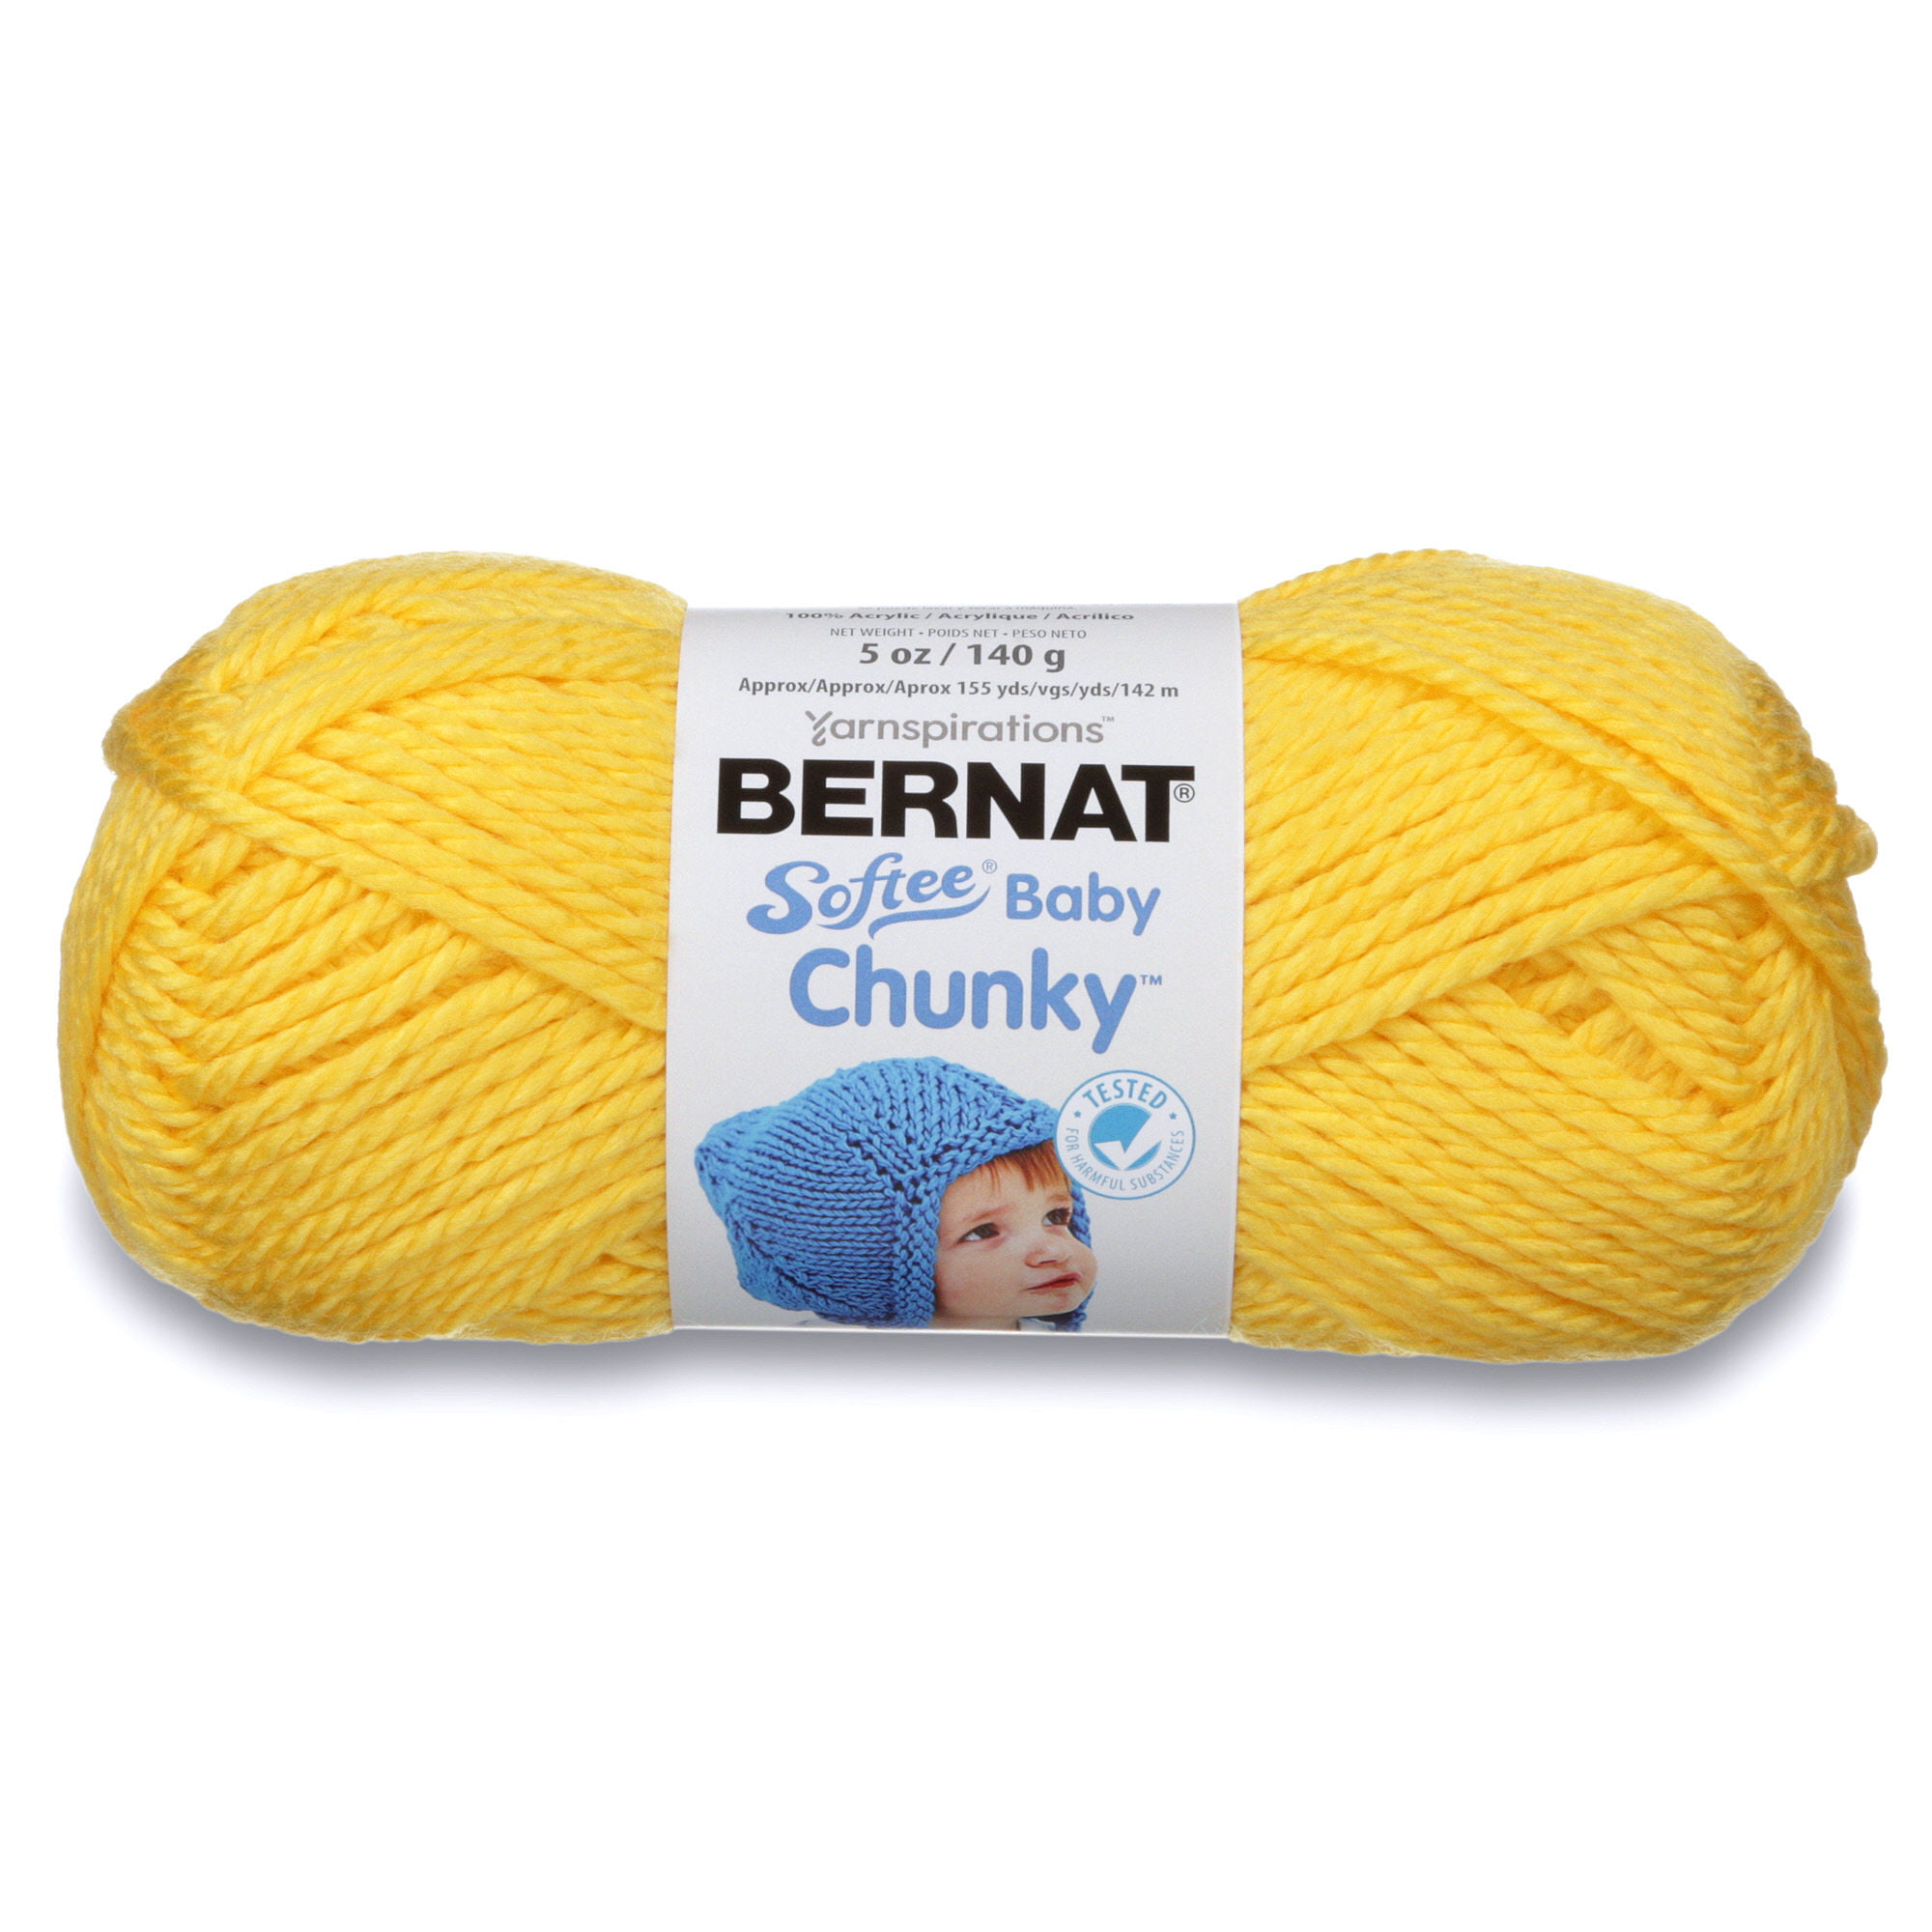 Bernat Softee Bb Baby Dinosaur 280g Knitting & Crochet Yarn